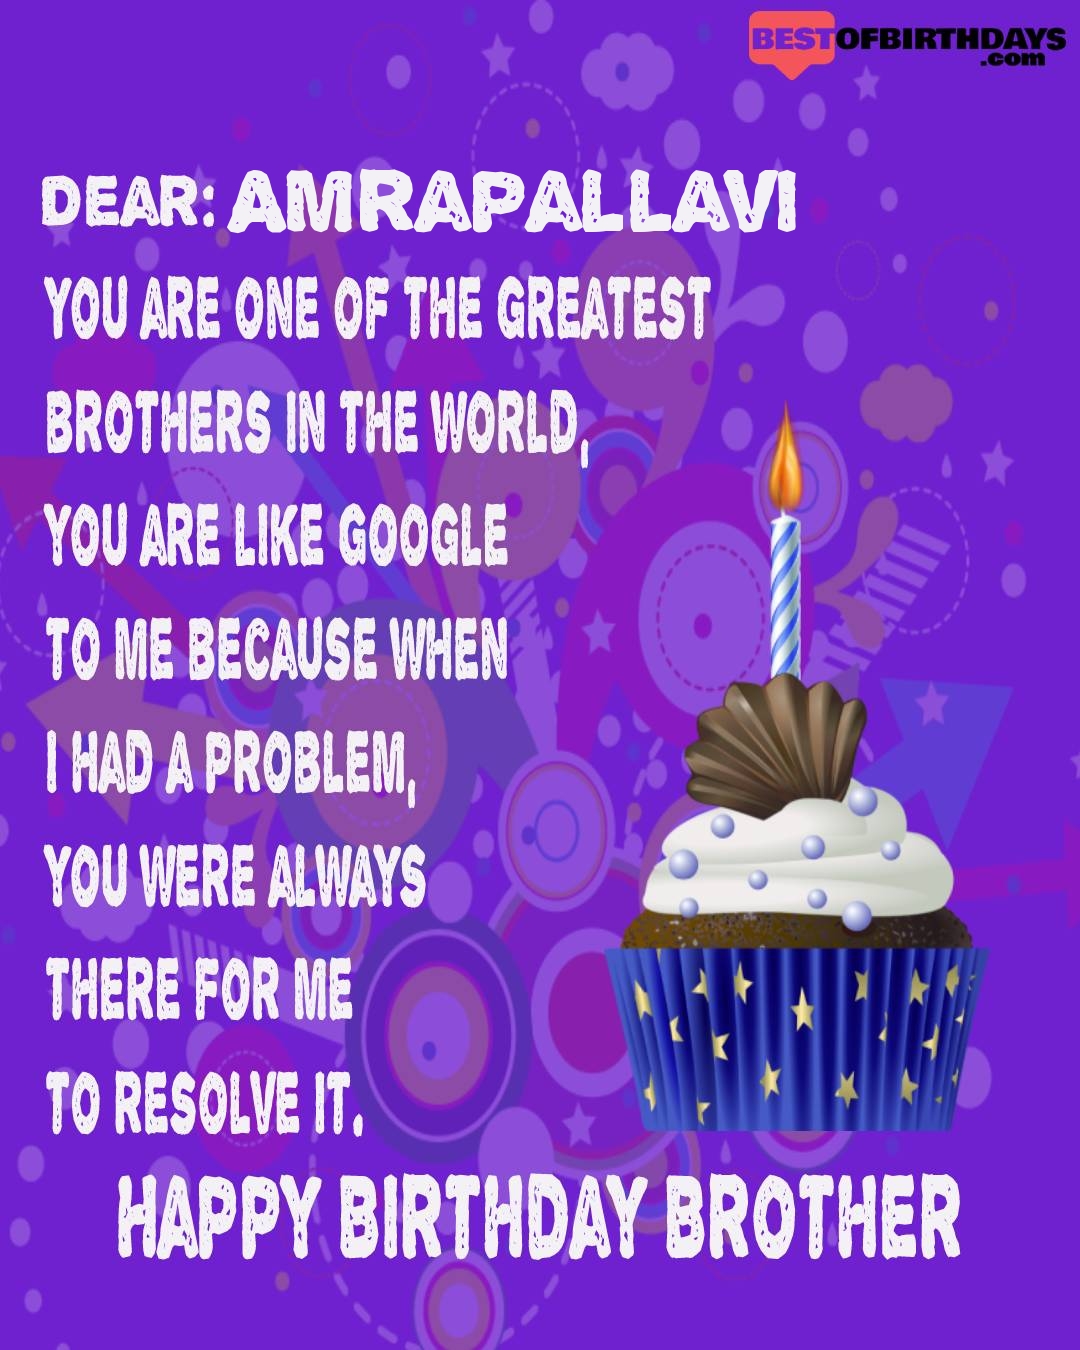 Happy birthday amrapallavi bhai brother bro